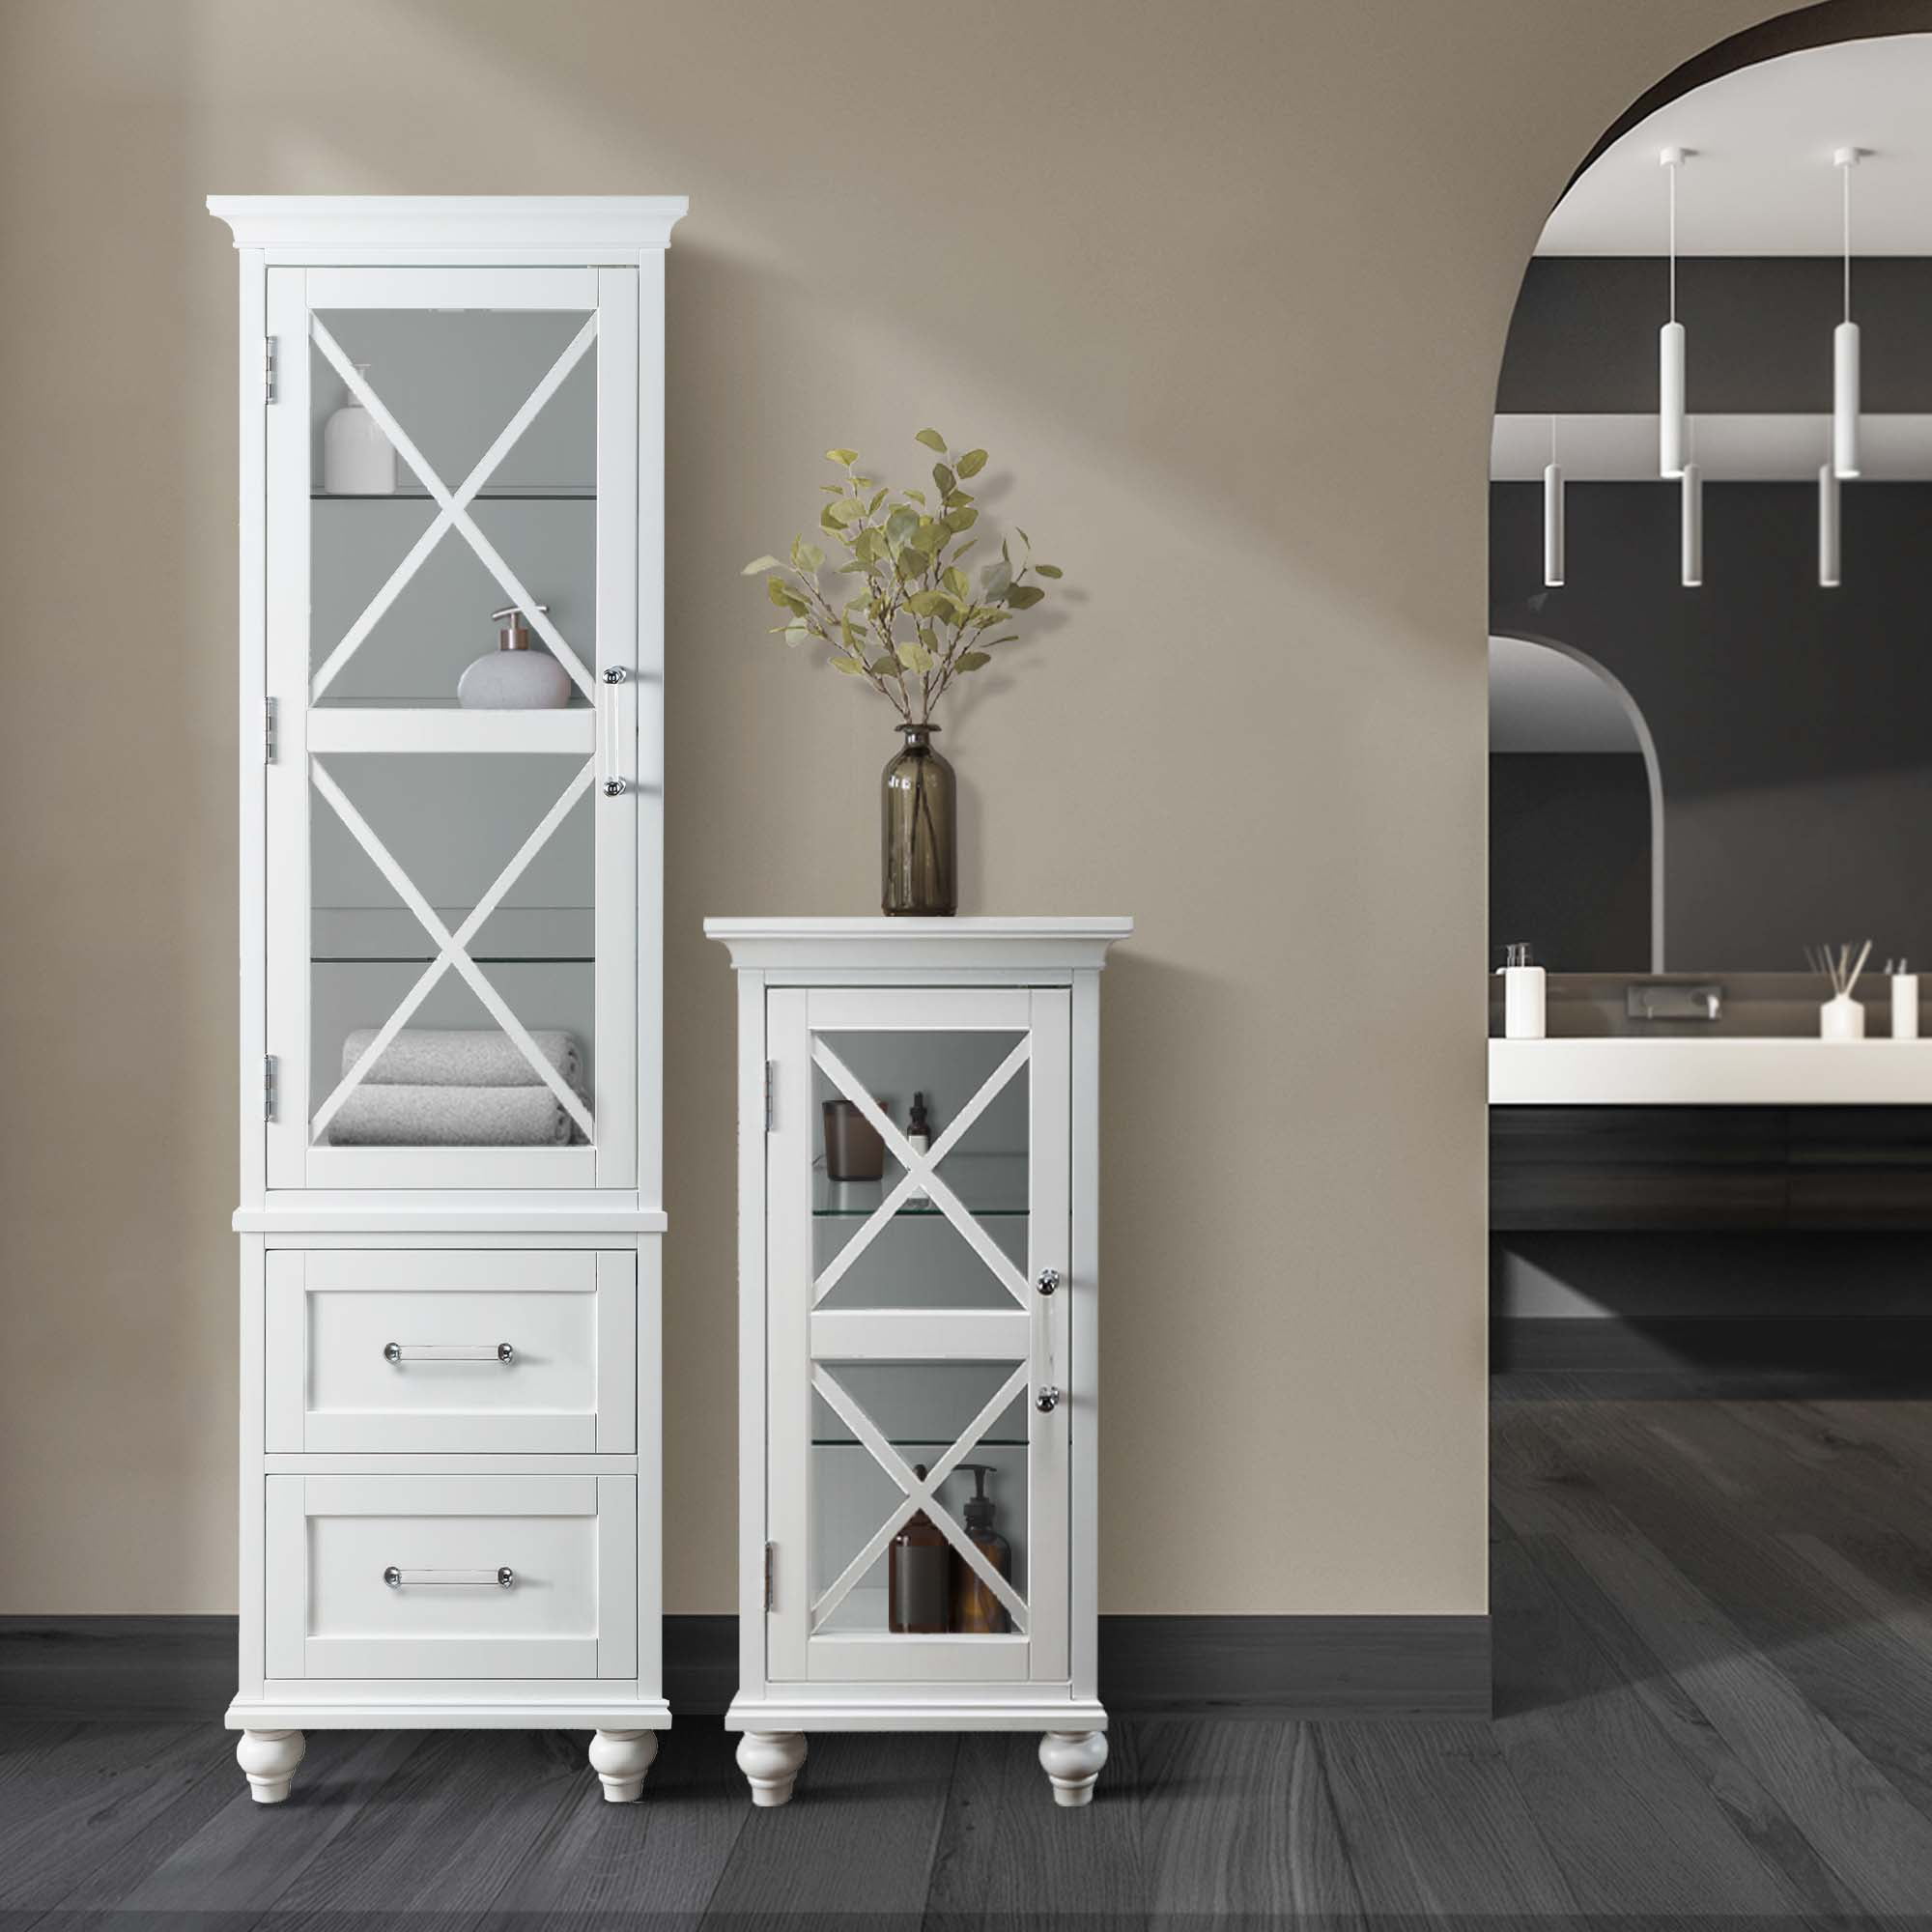 Elegant Home Fashions Wooden Bathroom Linen Storage Cabinet